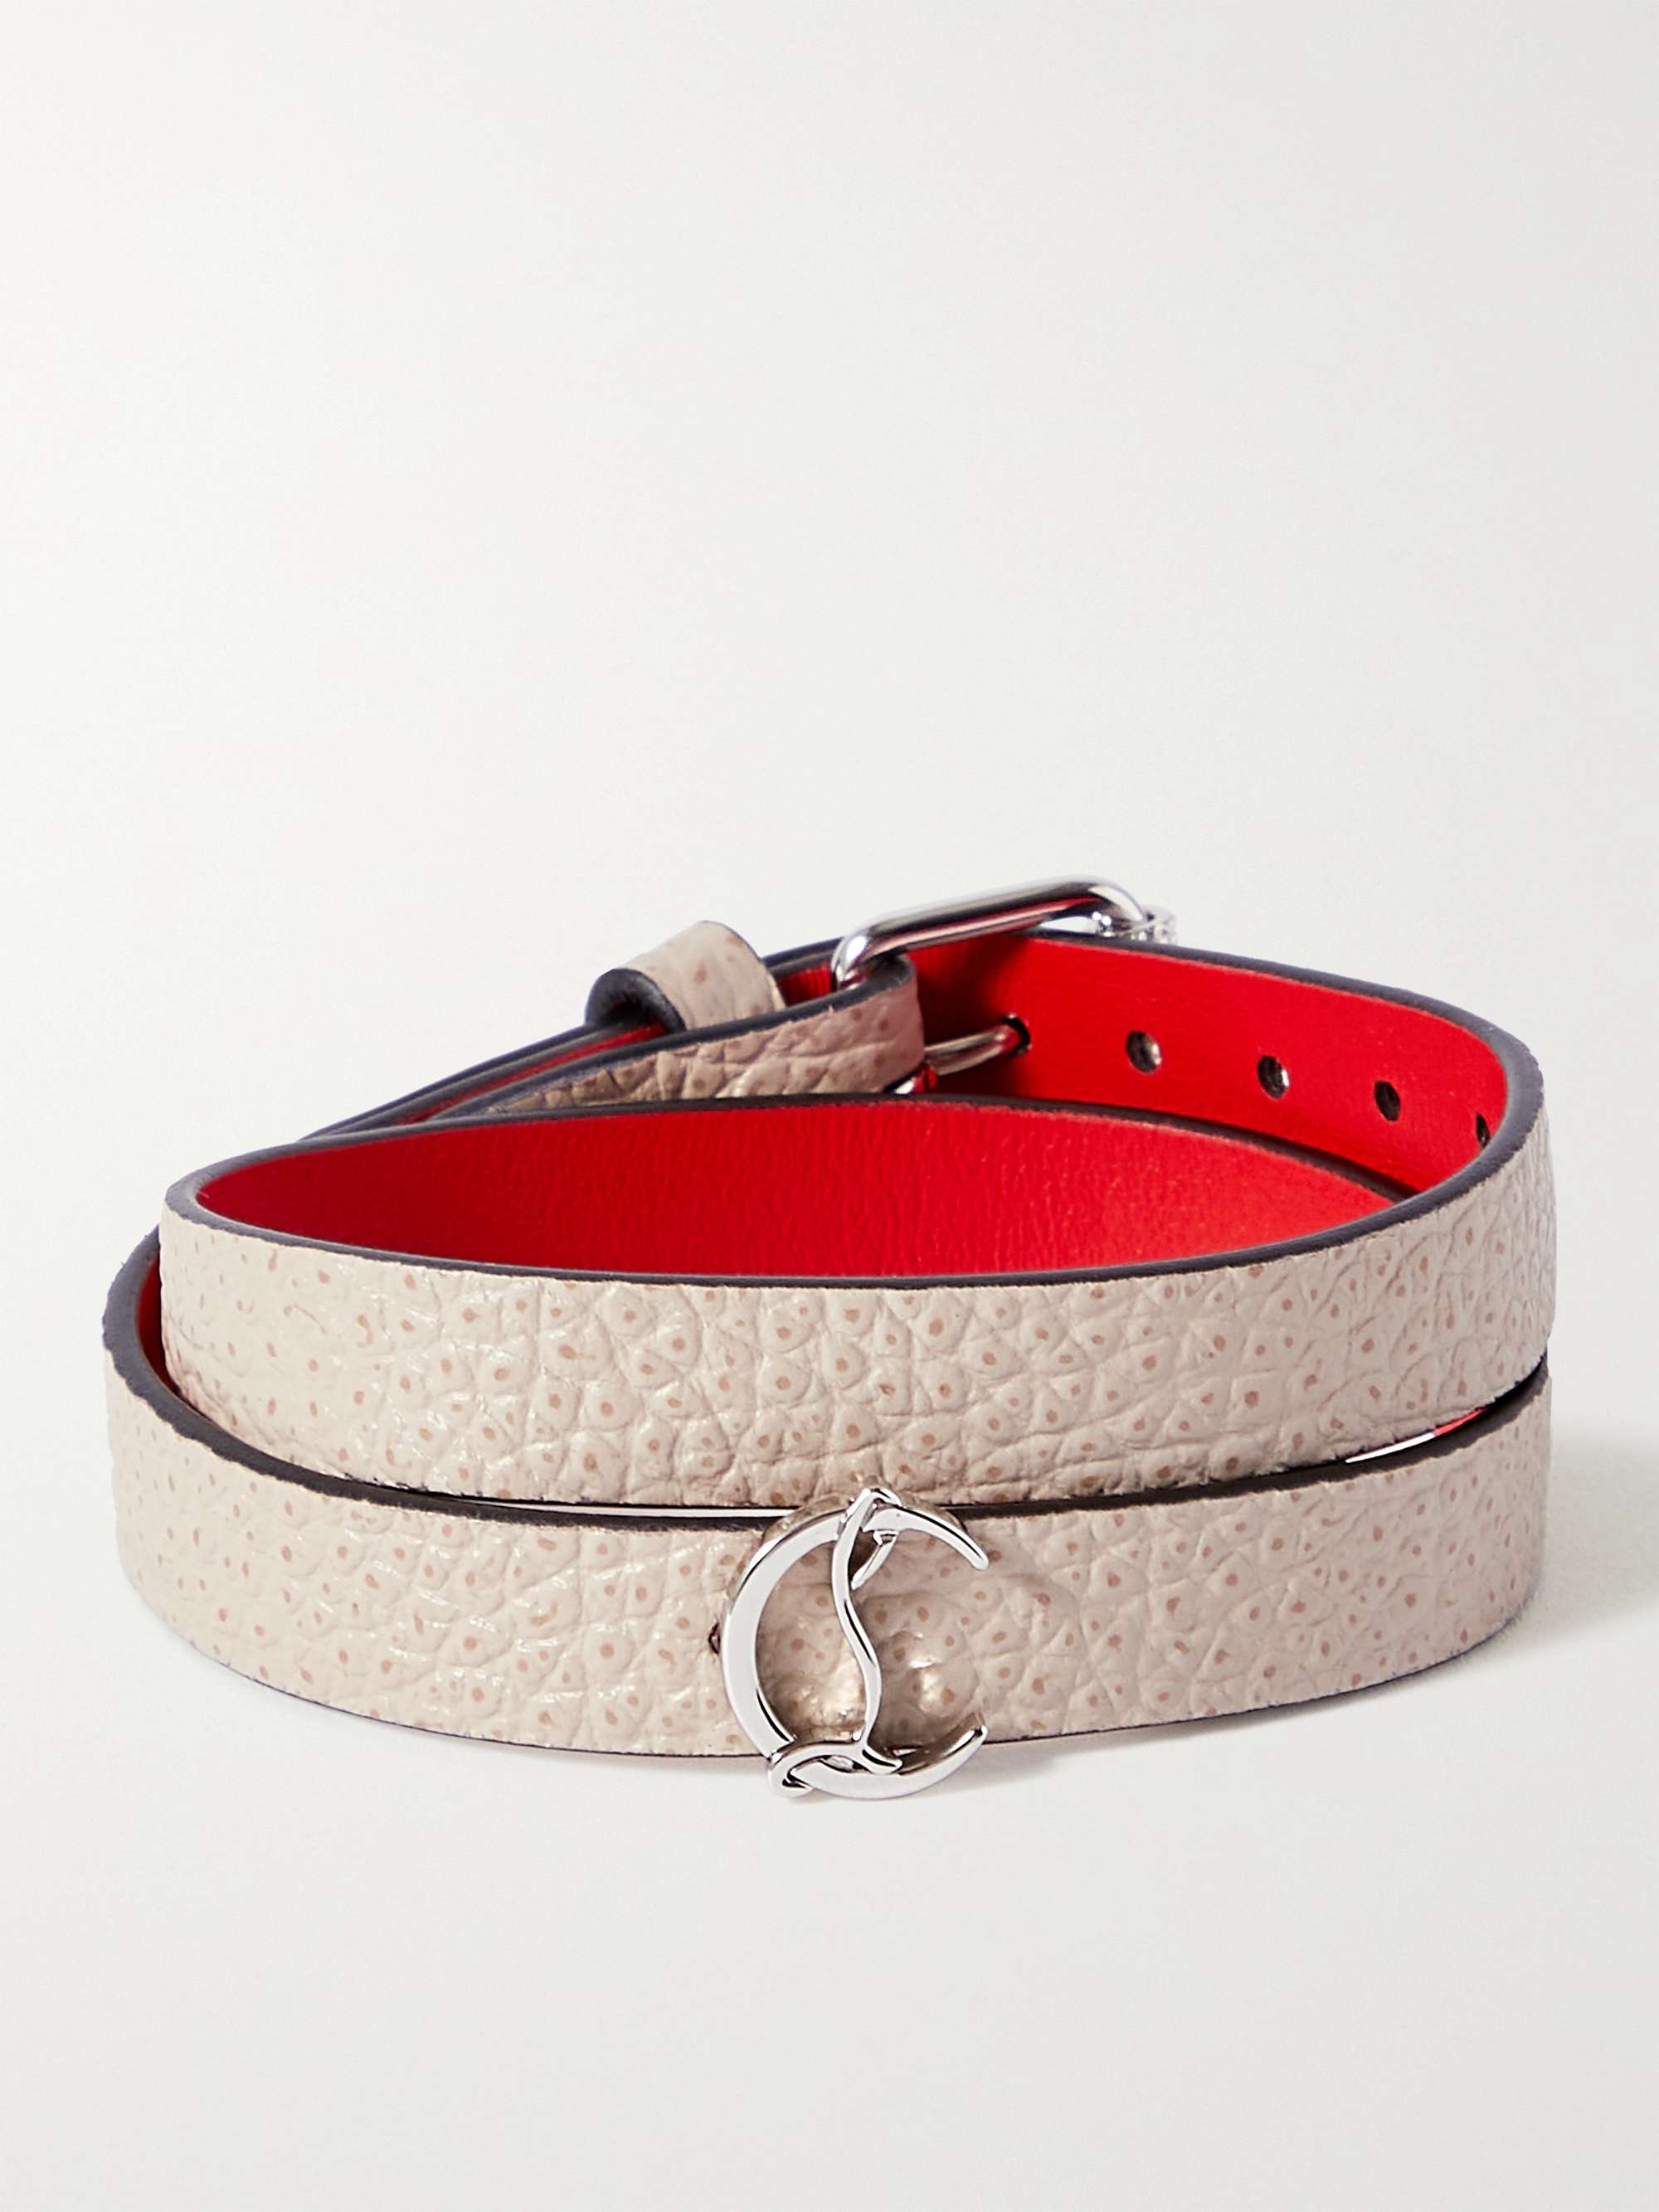 CHRISTIAN LOUBOUTIN Silver-Tone and Full-Grain Leather Wrap Bracelet